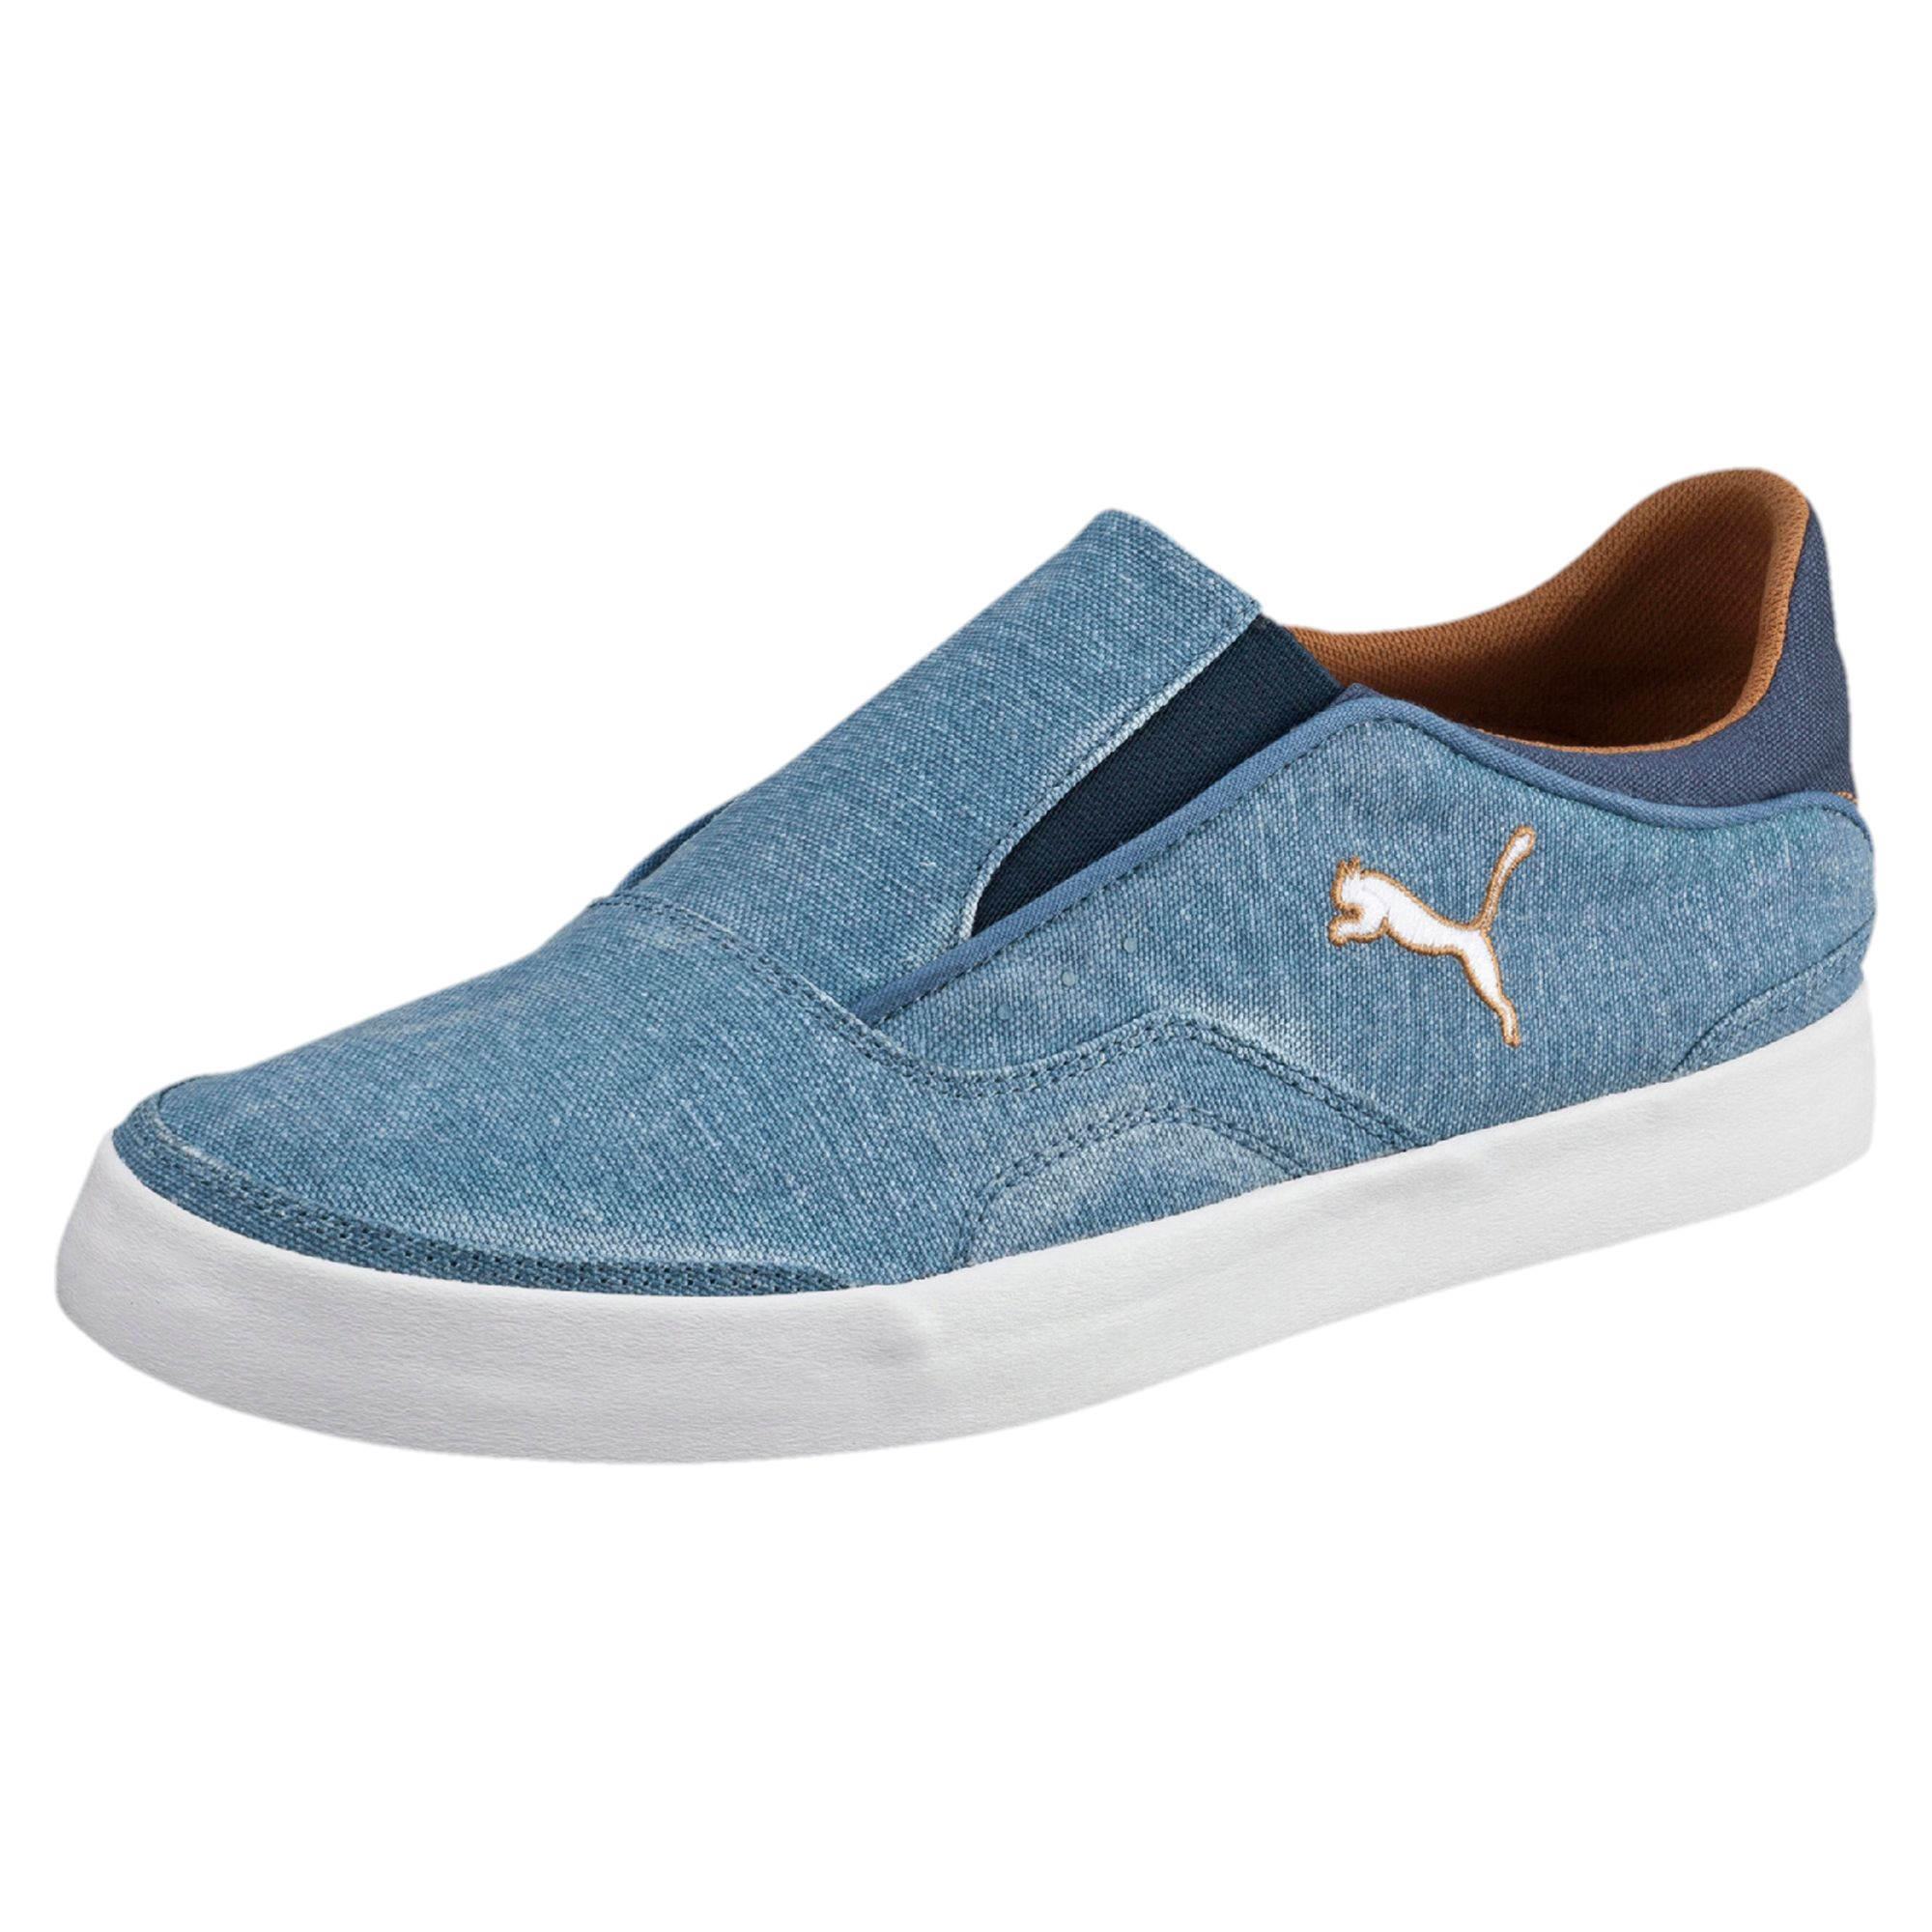 Lyst - PUMA Funist Slider Slip-on Men's Shoes in Blue for Men